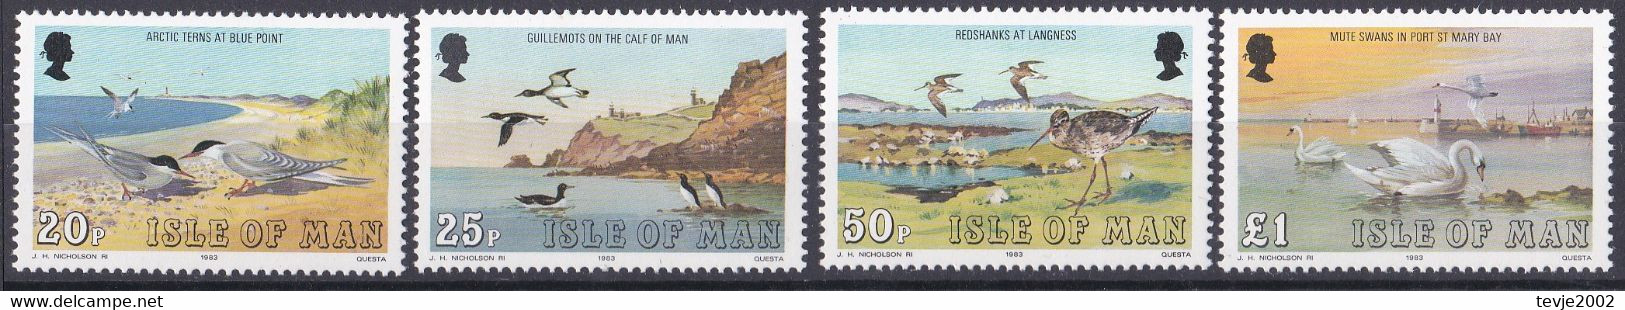 Isle Of Man 1983 - Mi.Nr. 232 - 235 - Postfrisch MNH - Tiere Animals Vögel Birds - Golondrinas